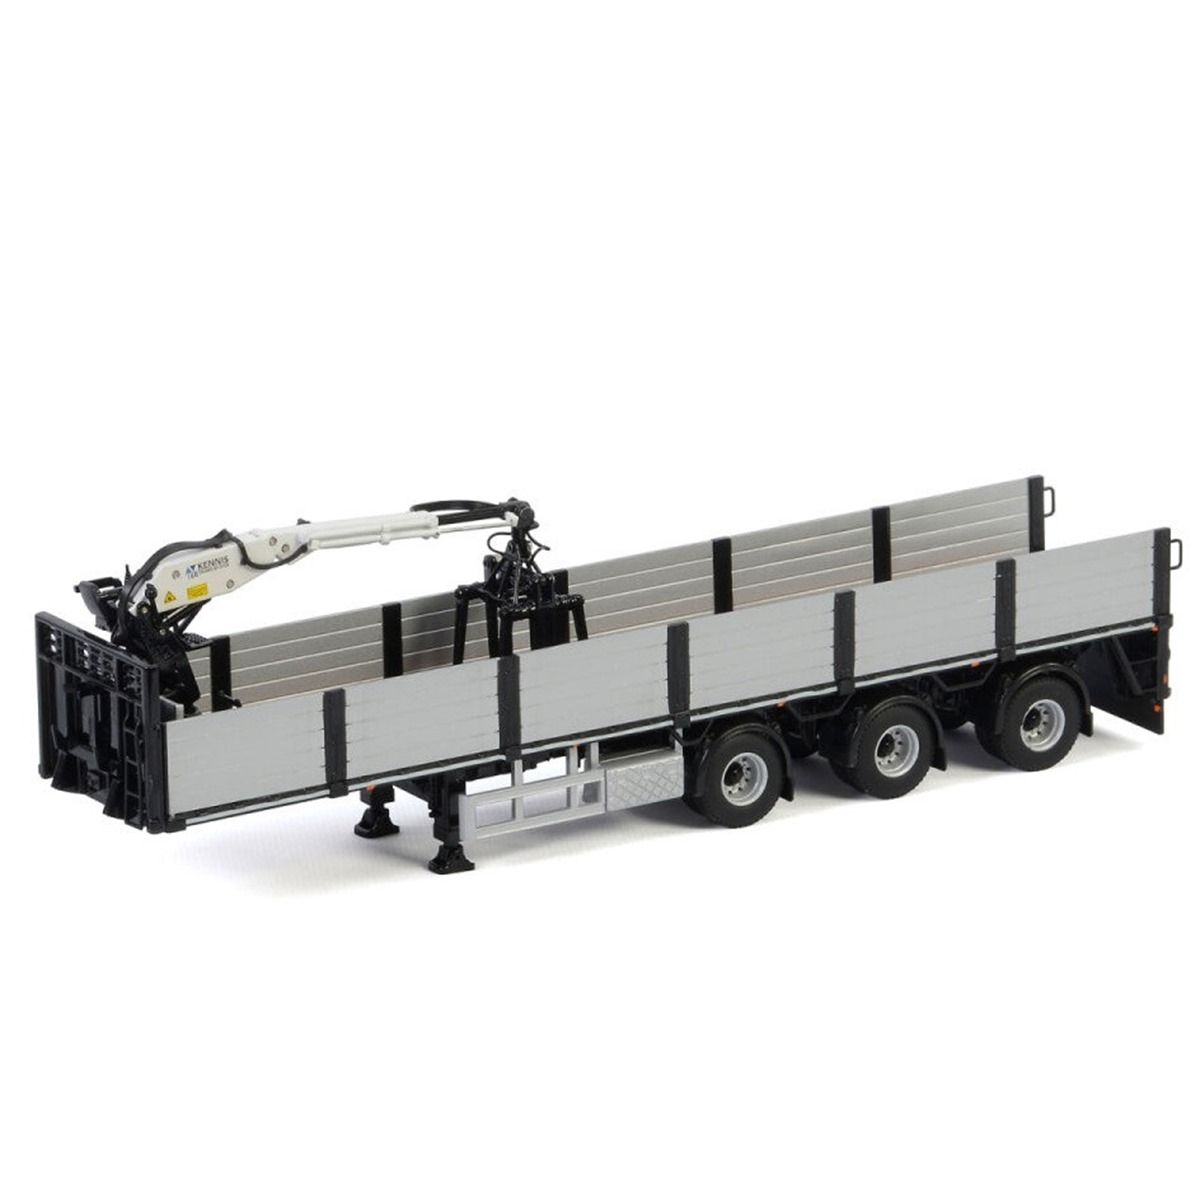 Premium-line-brick-trailer-3-axle  Thumbnail0